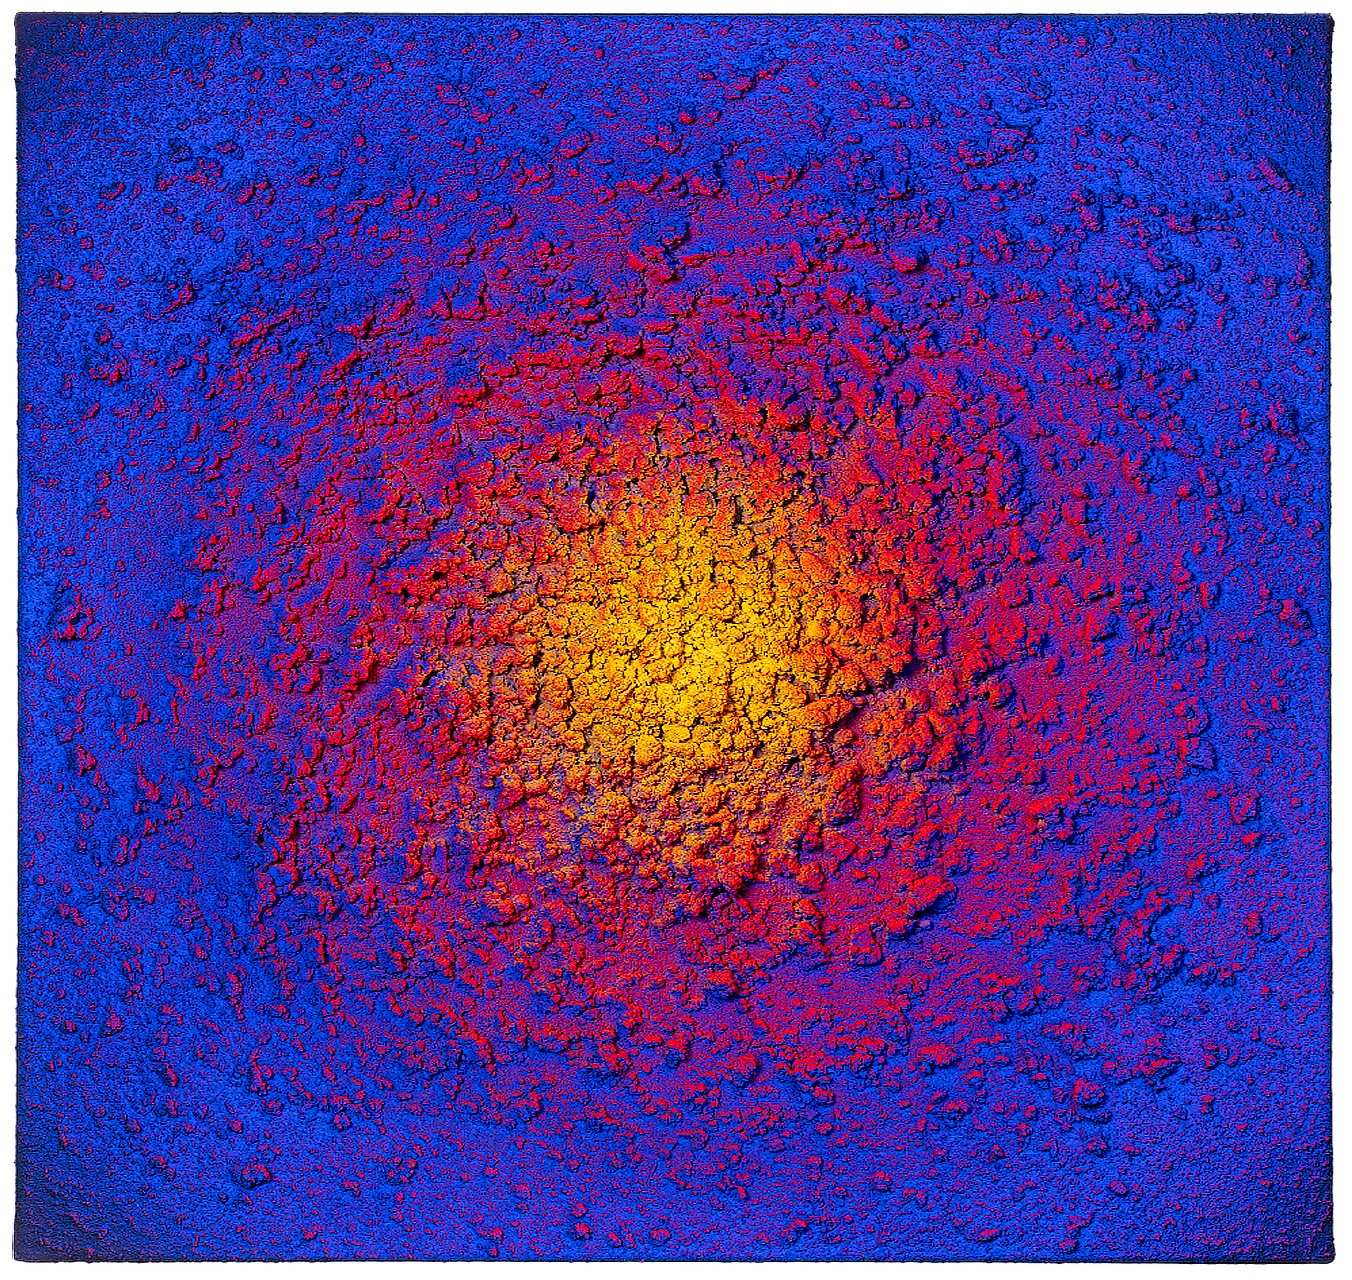 Interstellar Red Blue Yellow 18.16 - SAMUEL DEJONG - Galeries Bartoux